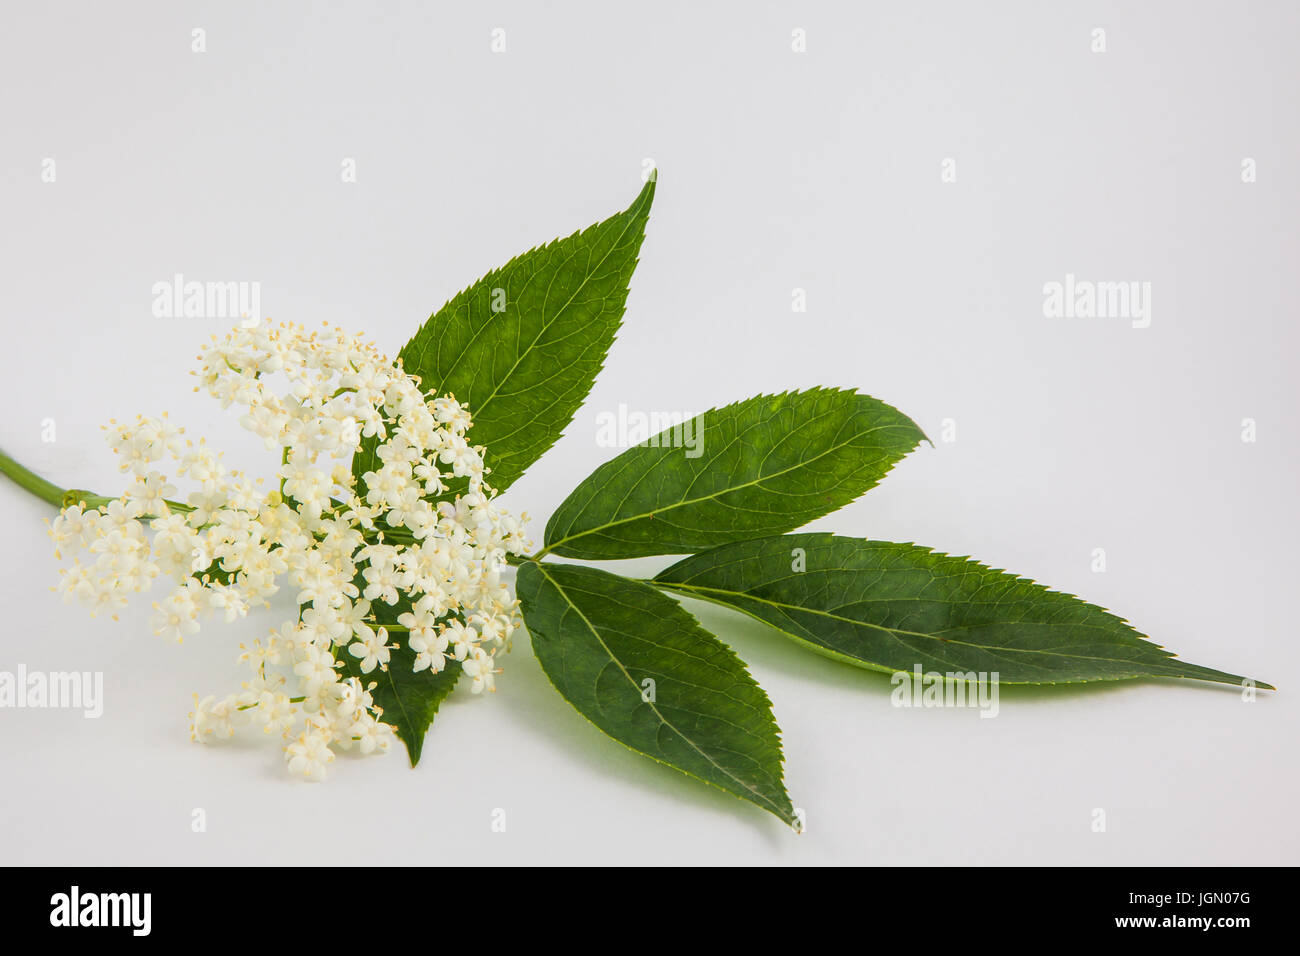 Inflorescence and leaves of elderflower (Sambucus nigra) on white background Stock Photo